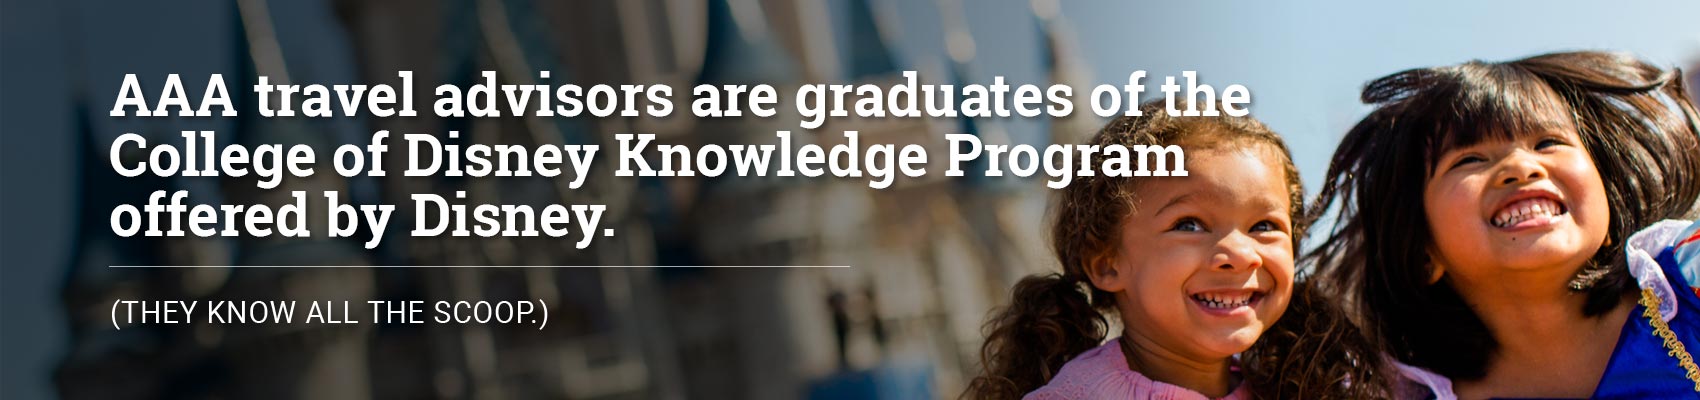 Advisors are graduates of the College of Disney Knowledge Program 